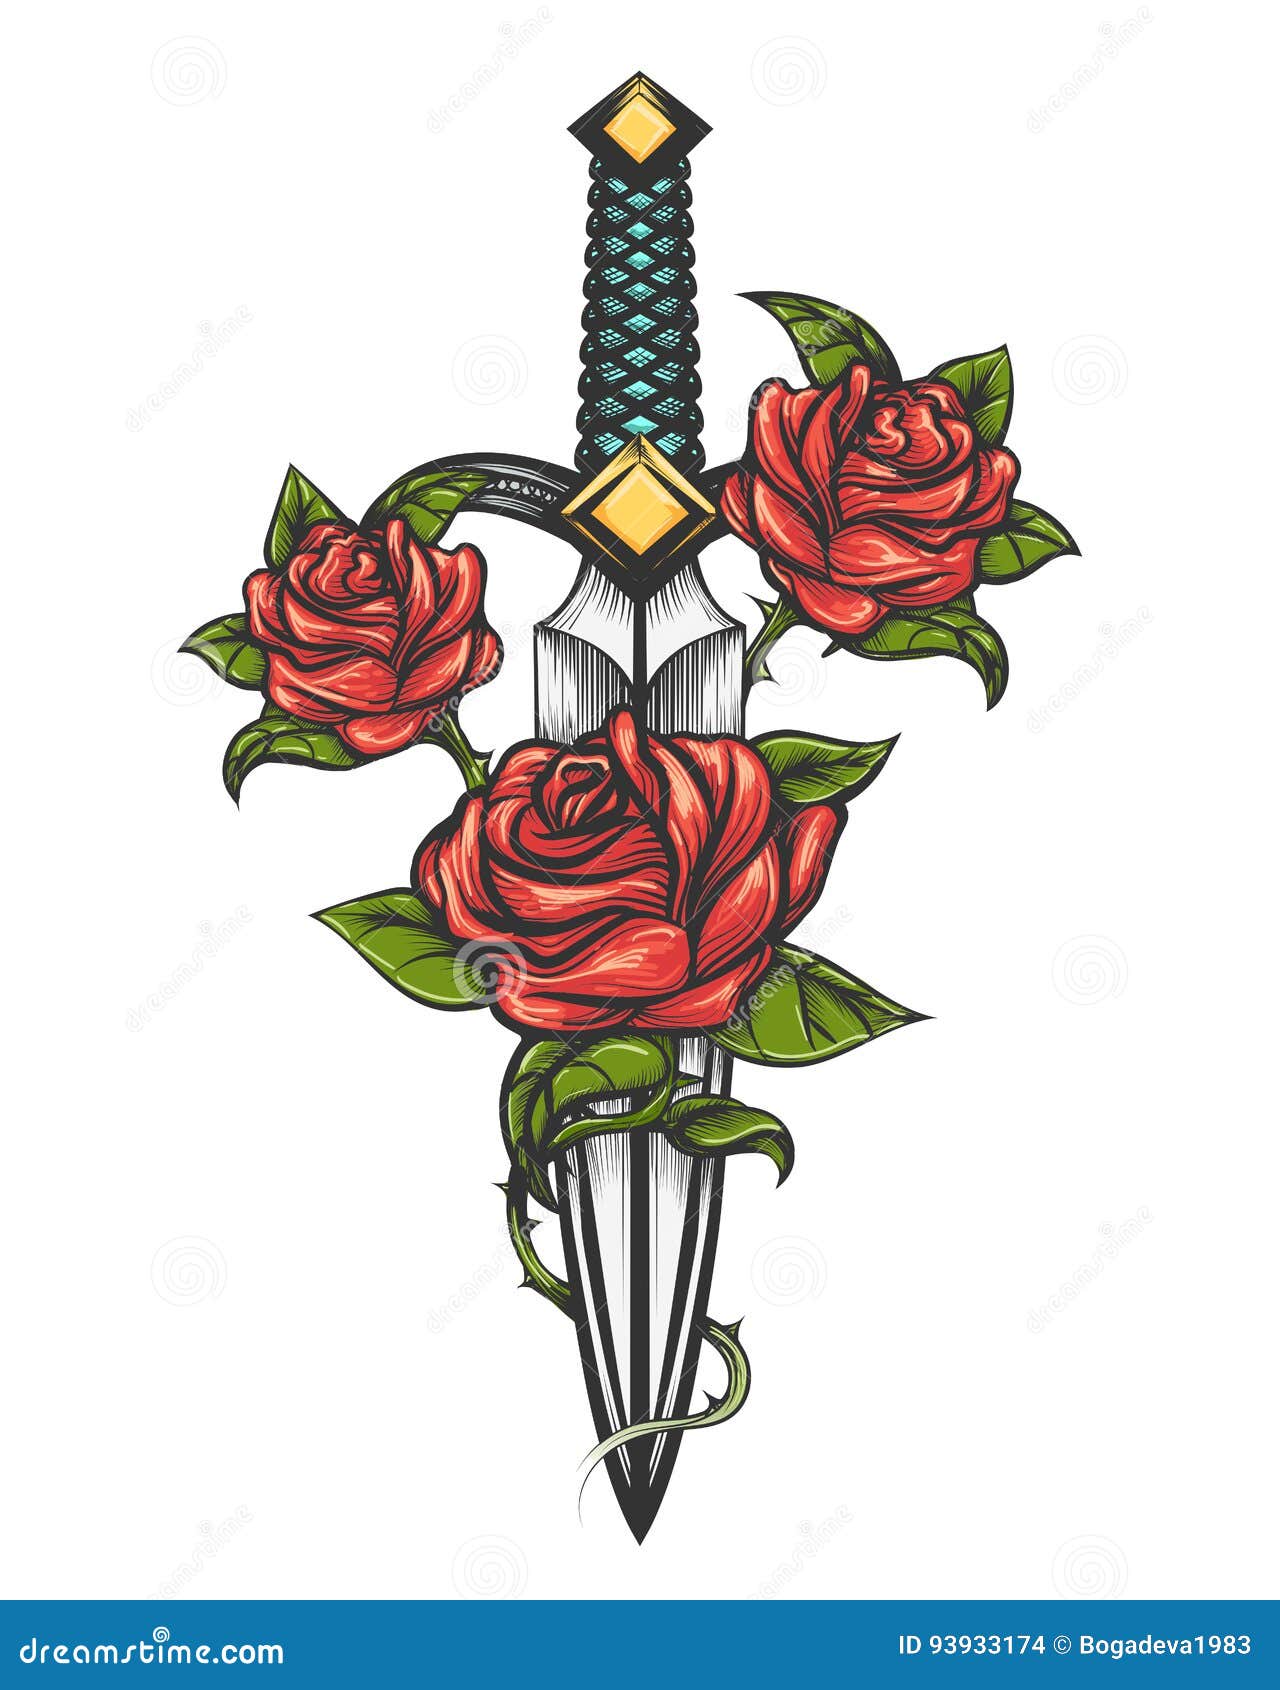 690 Sword And Rose Illustrations RoyaltyFree Vector Graphics  Clip Art   iStock